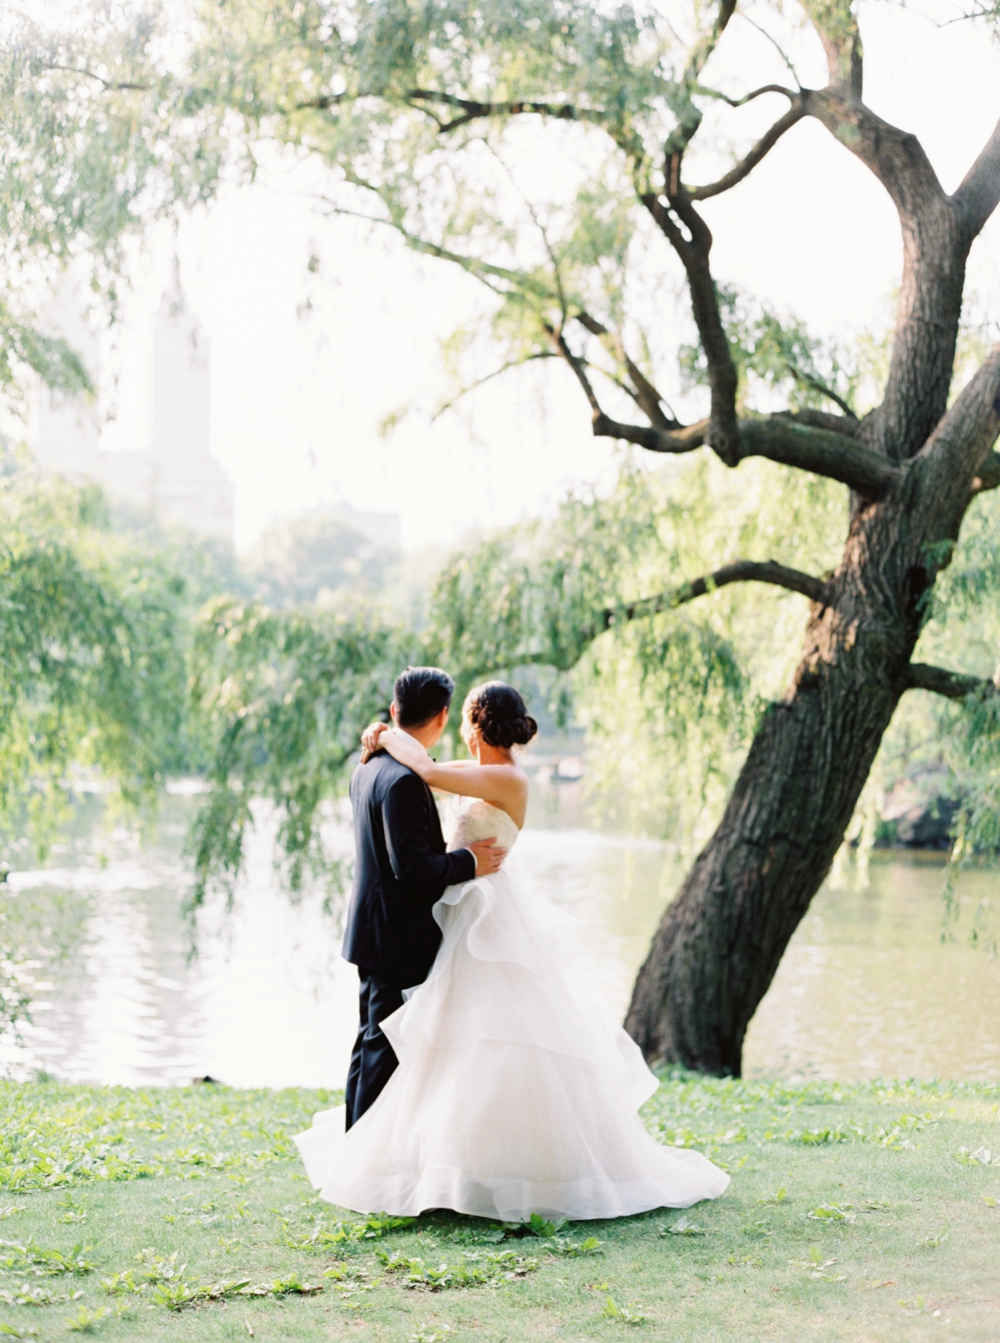 New York City Wedding | The Boat House Wedding Reception | Central Park Wedding Photographer | Calgary Wedding Photographers | Church Wedding